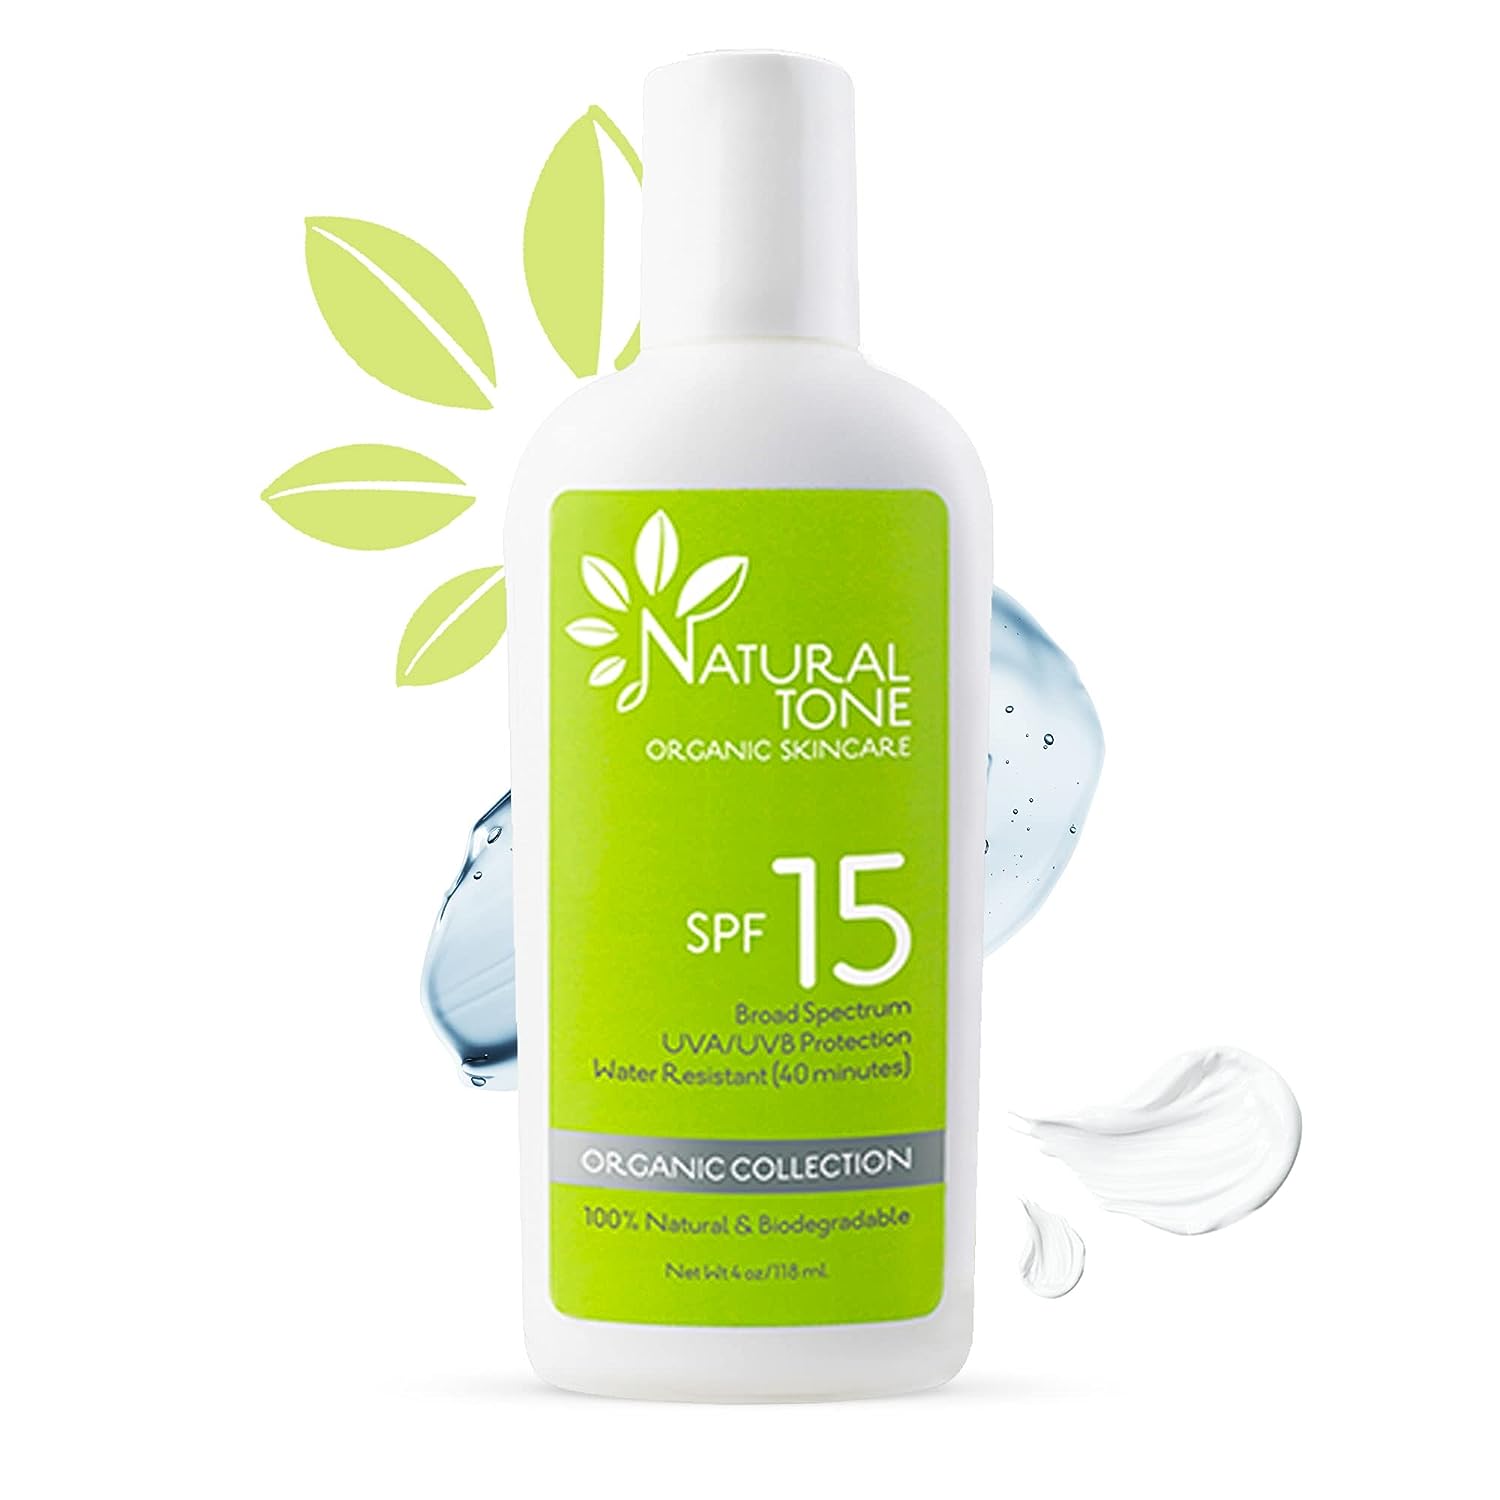 SPF 15 Natural Sunscreen